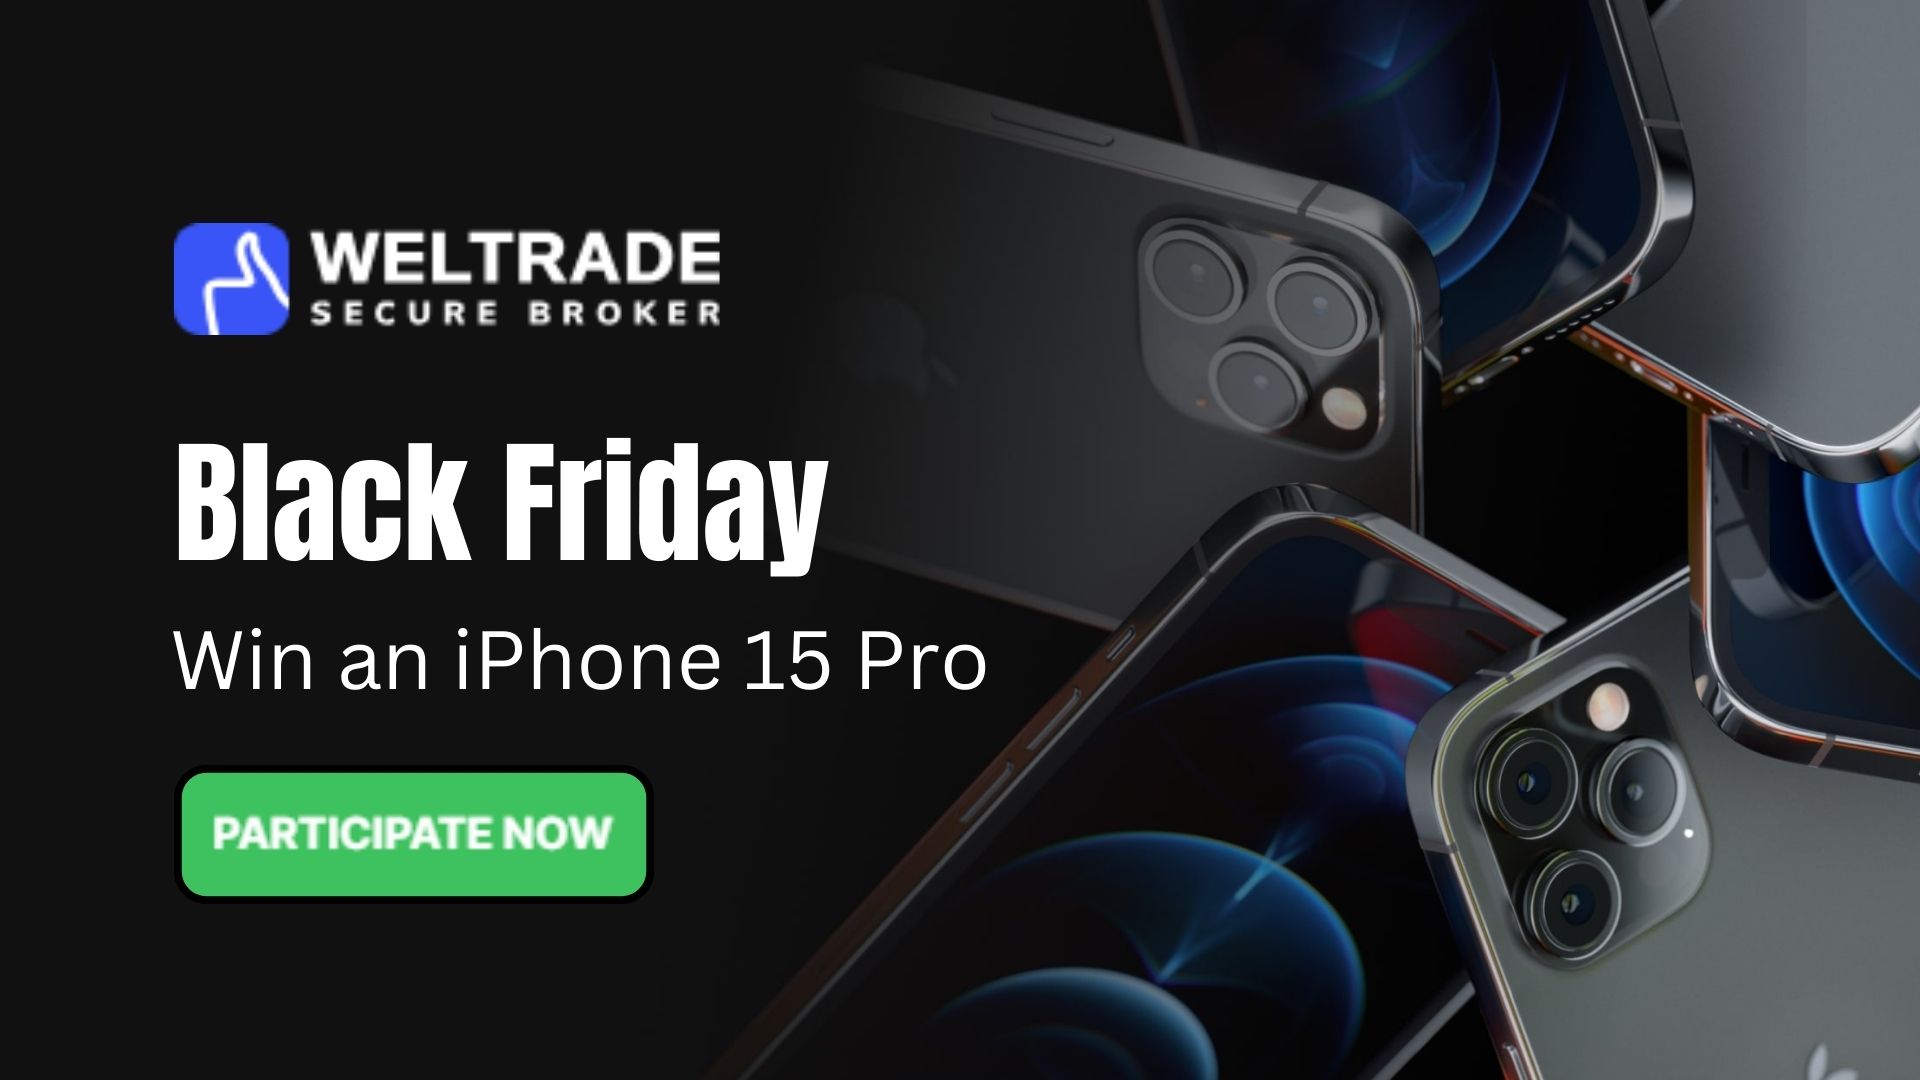 Black Friday, Win iPhone 15 Pro – WelTrade